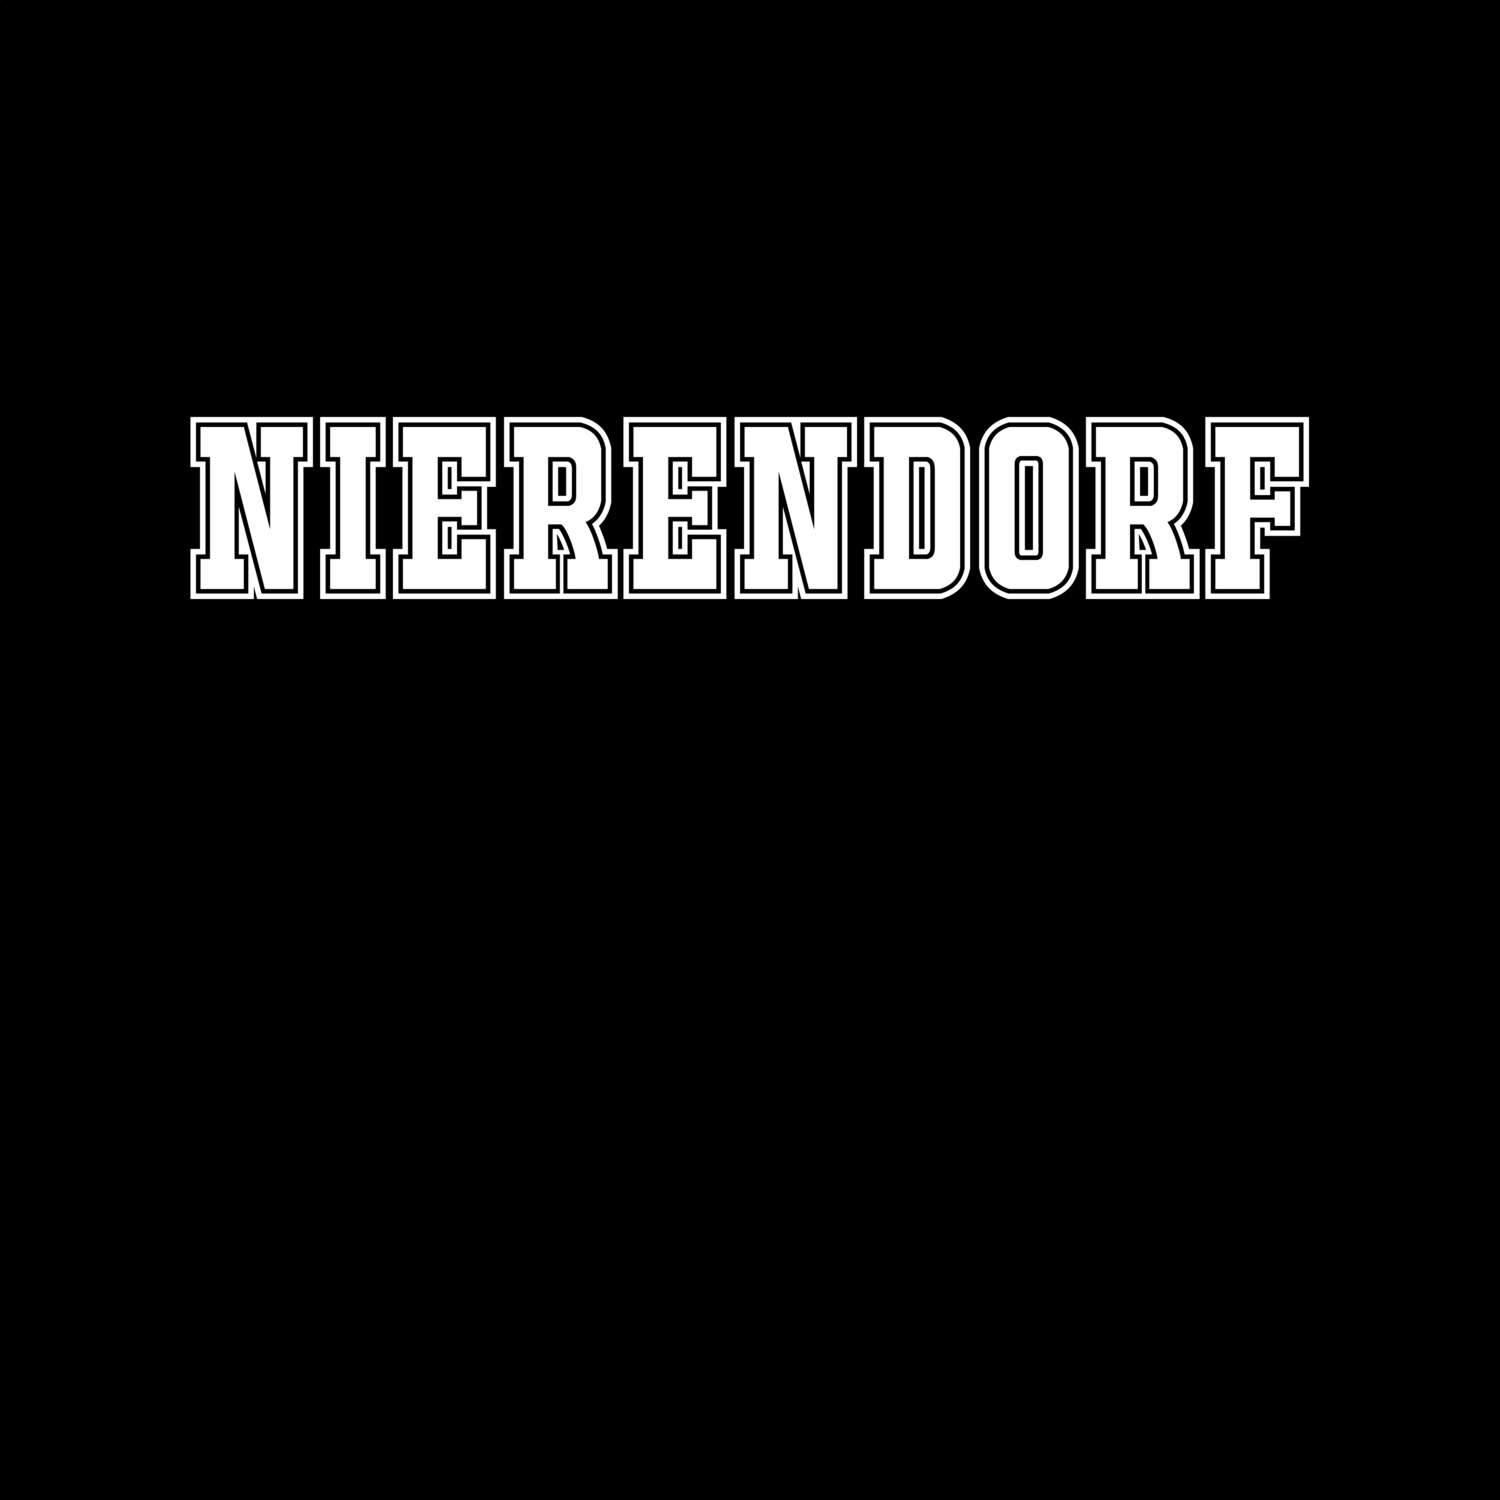 Nierendorf T-Shirt »Classic«